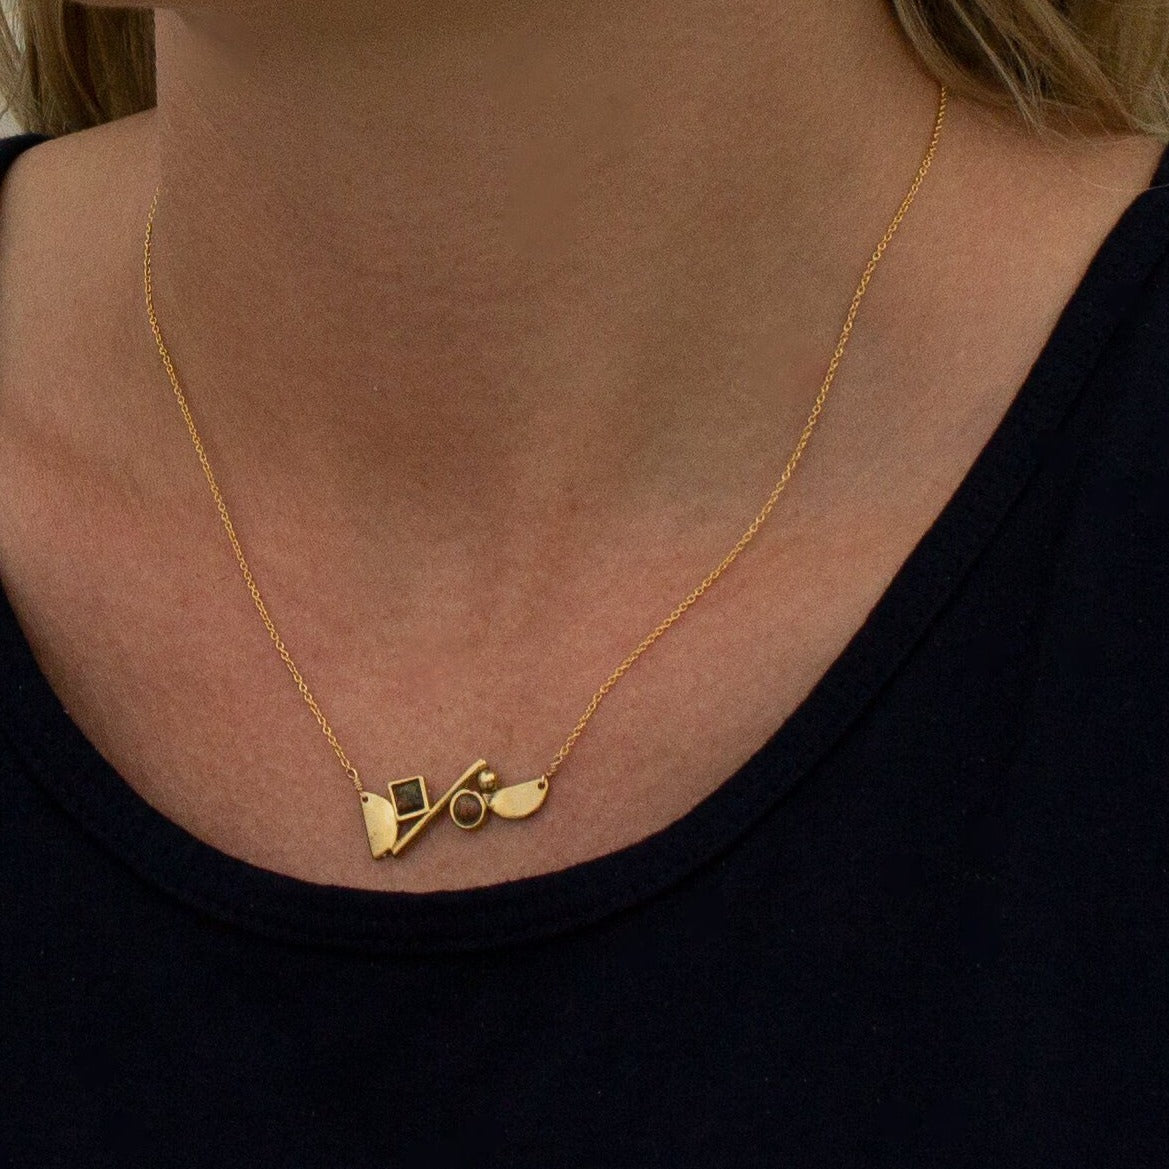 shapes necklace, unakite stones, brass pendant, model.. 